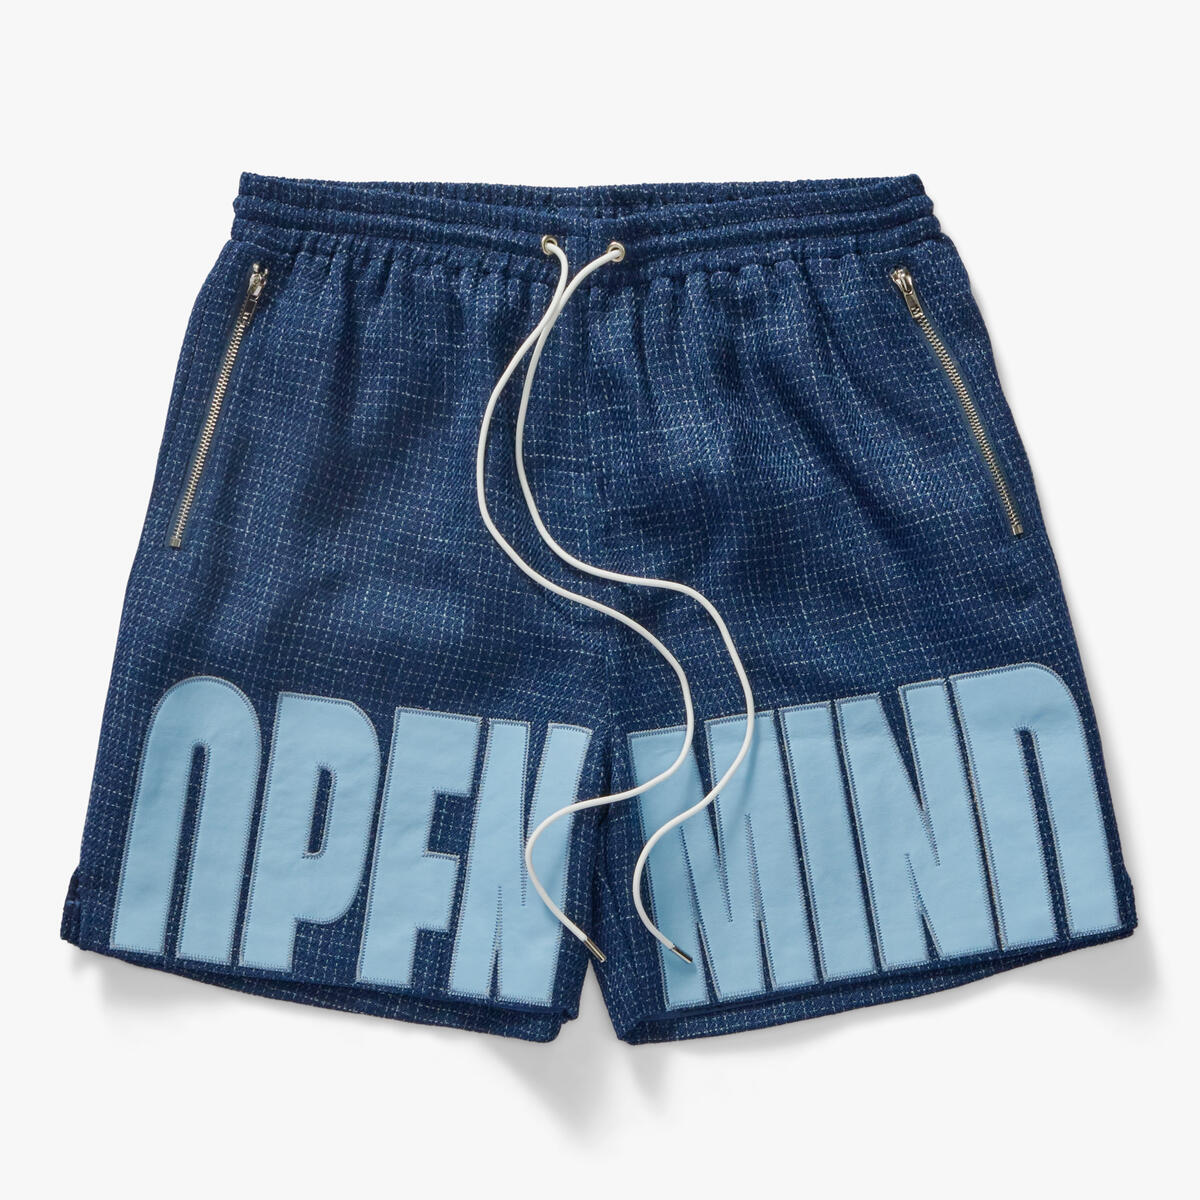 "Open Mind" Shorts - Navy Blue